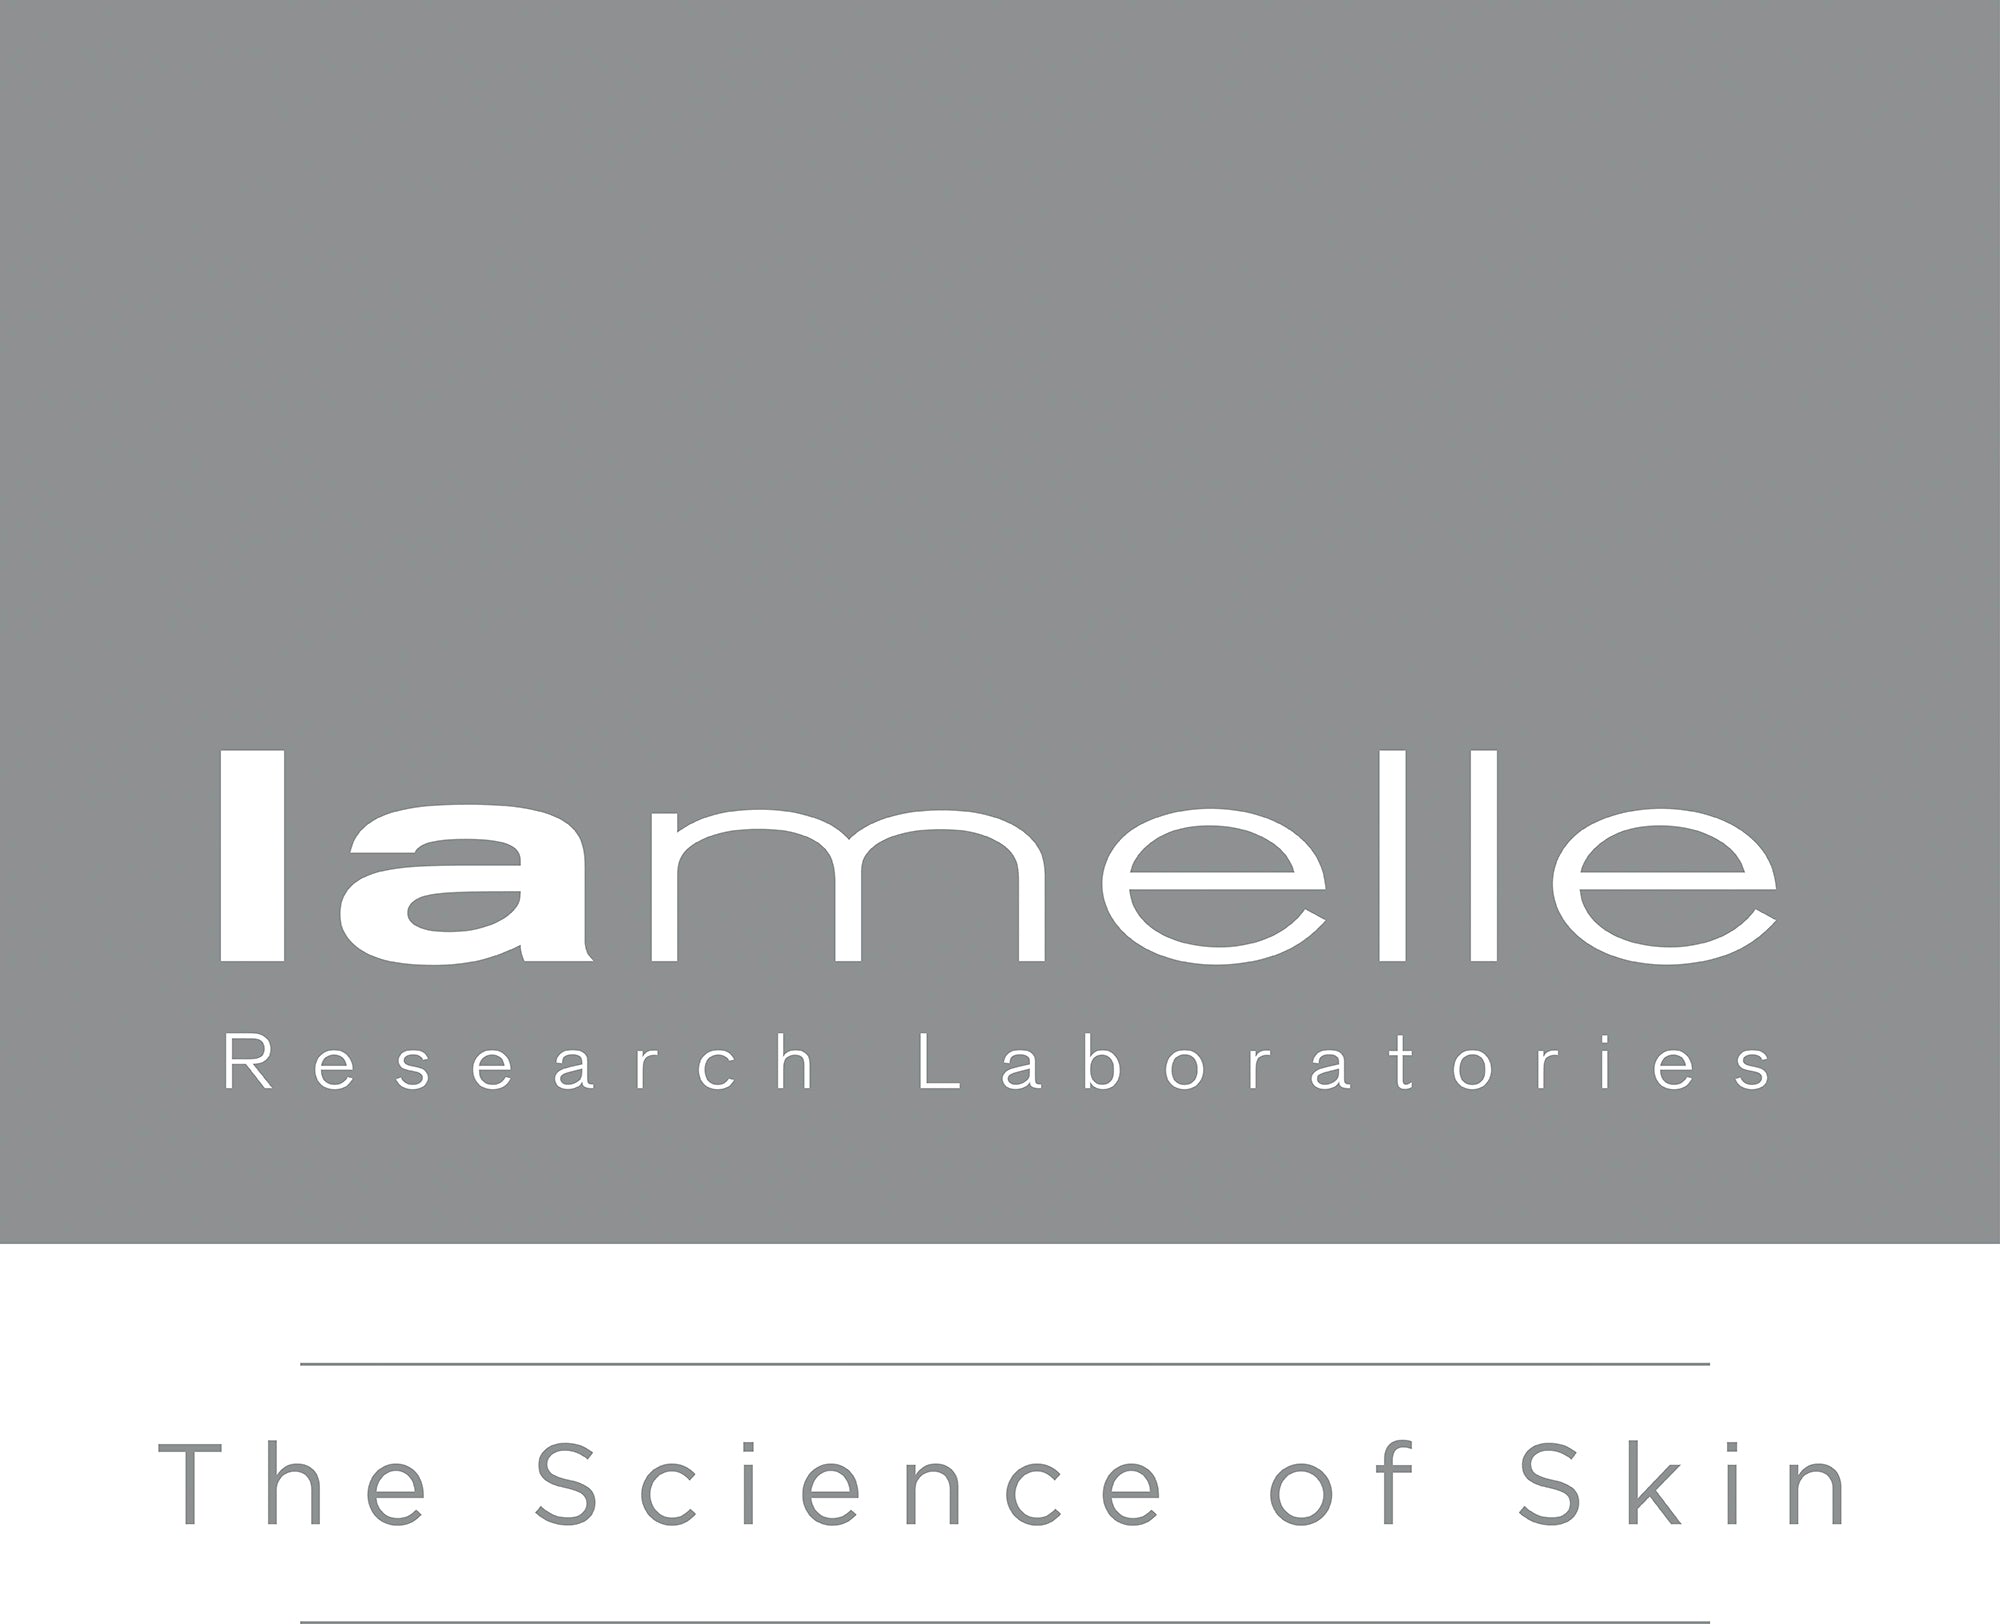 Serra Cleansing Gel | Lamelle